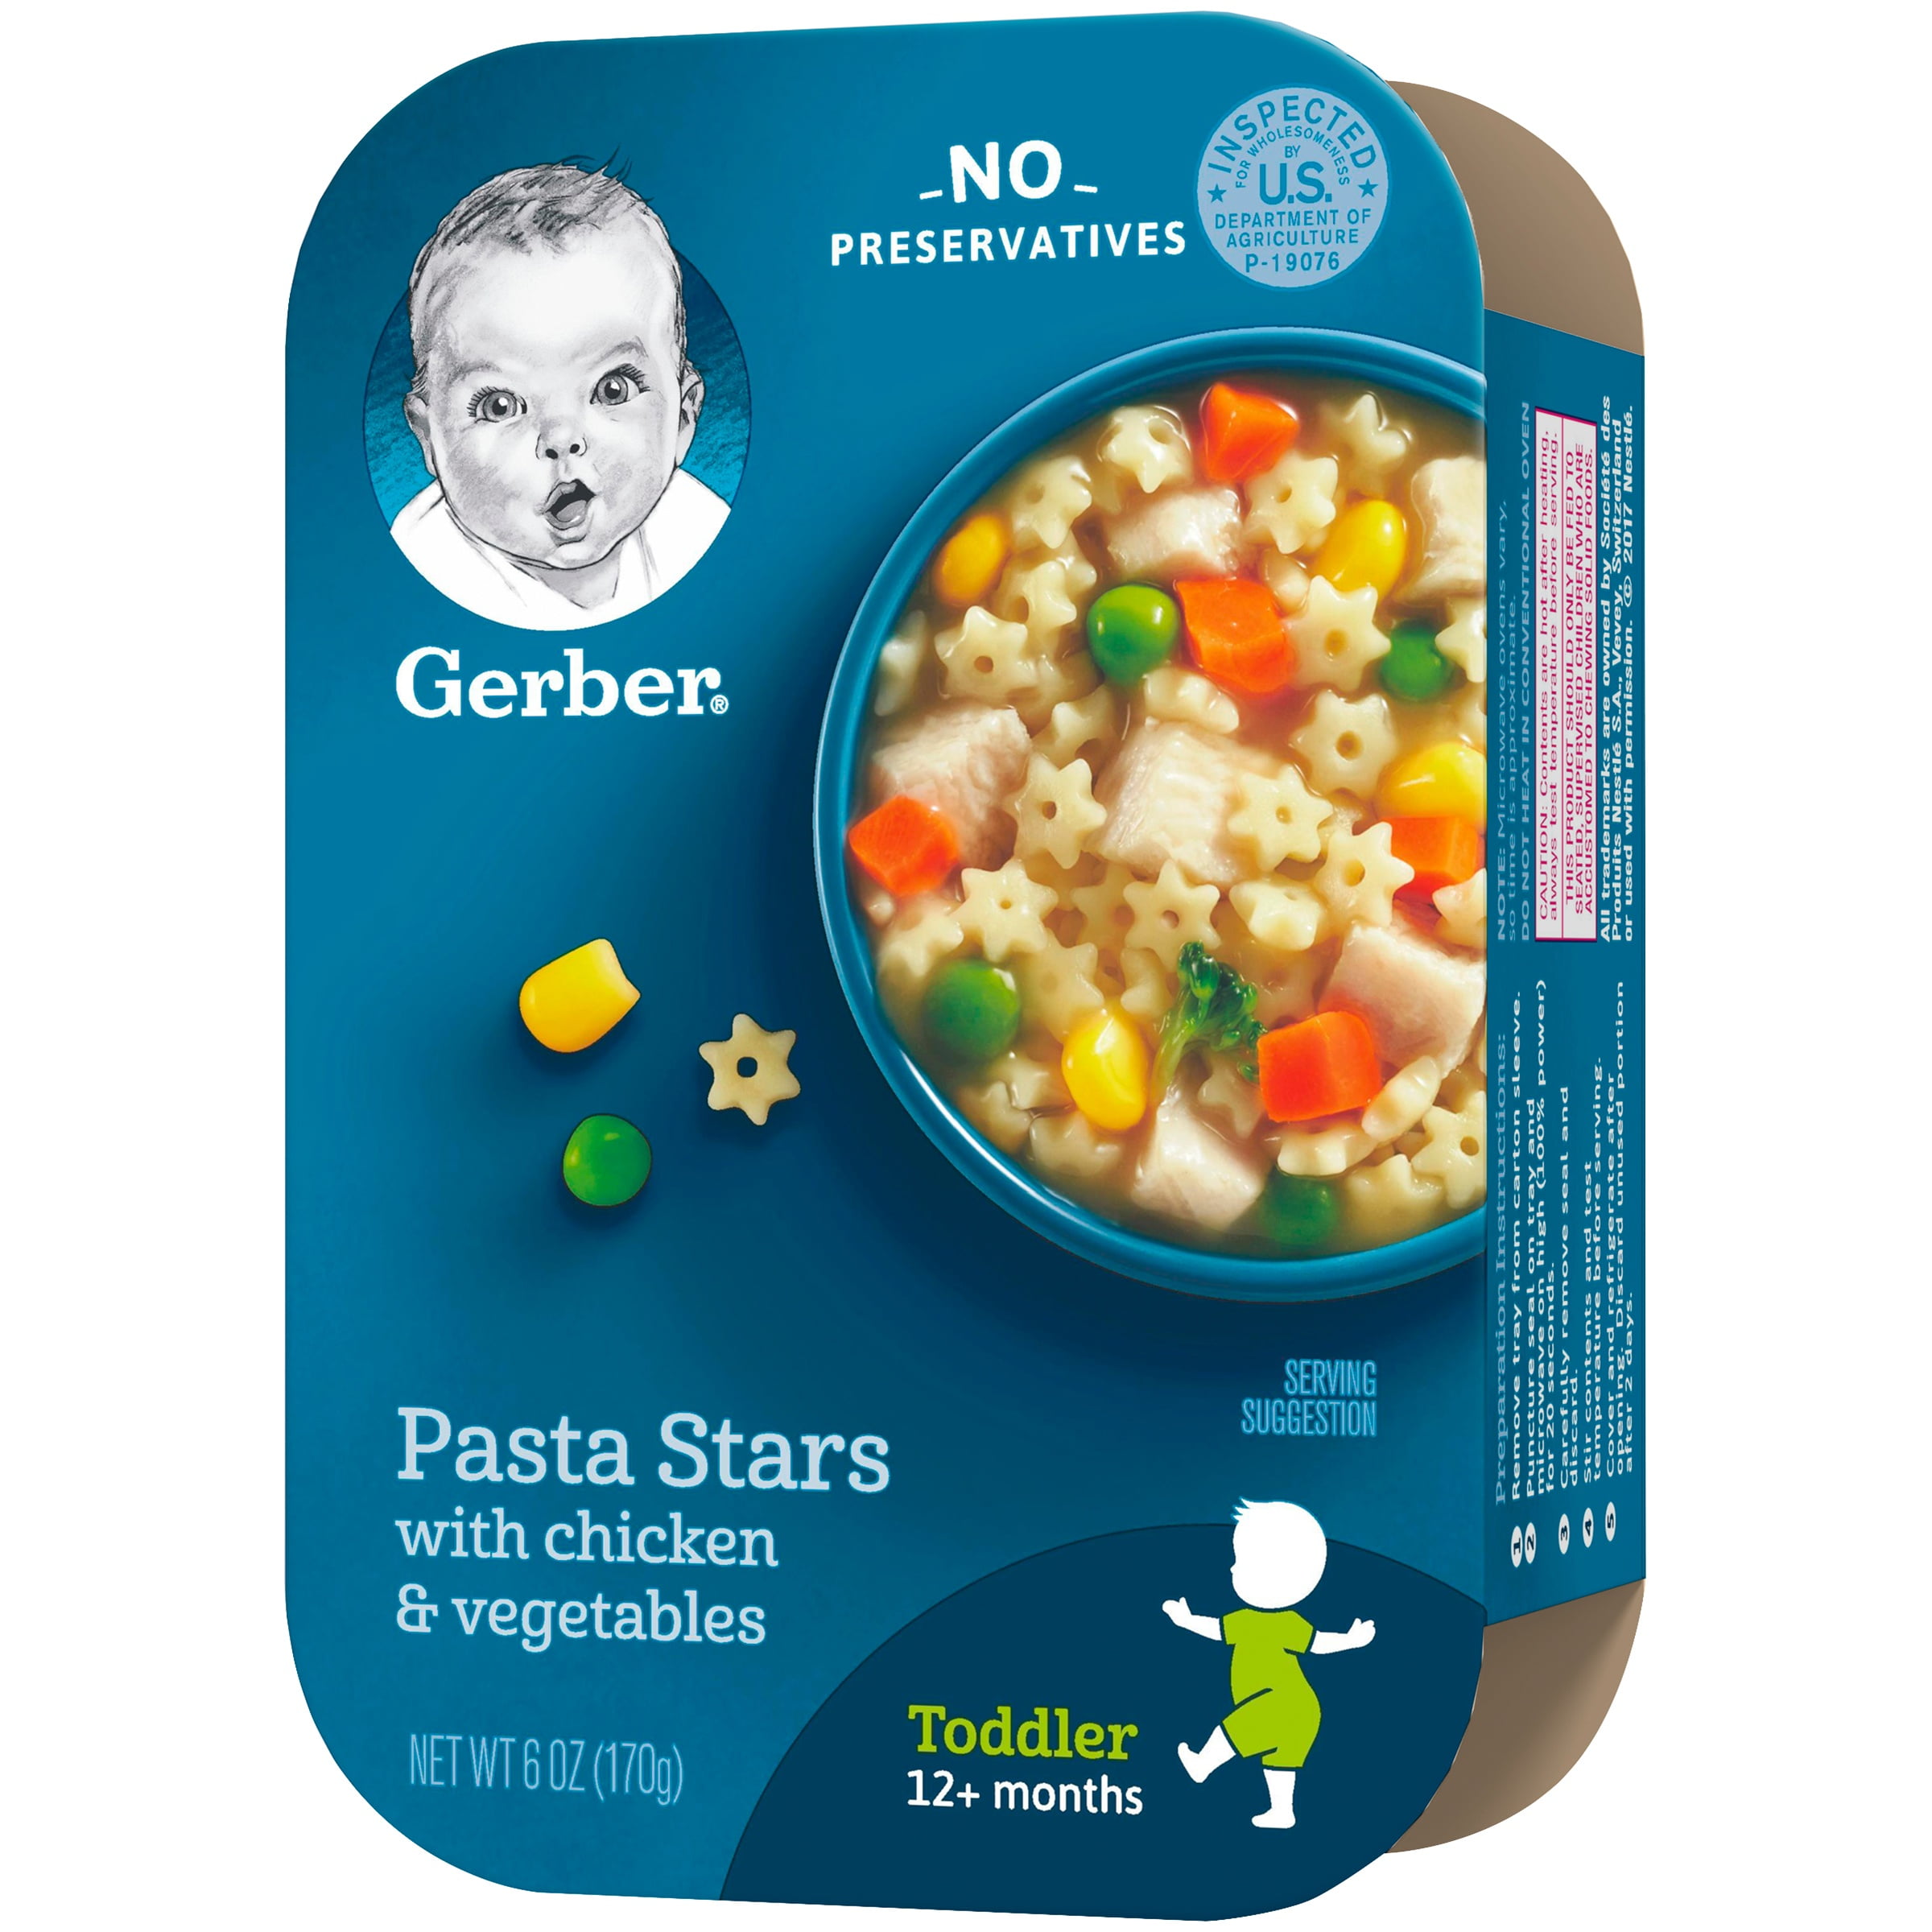 gerber chunky baby food